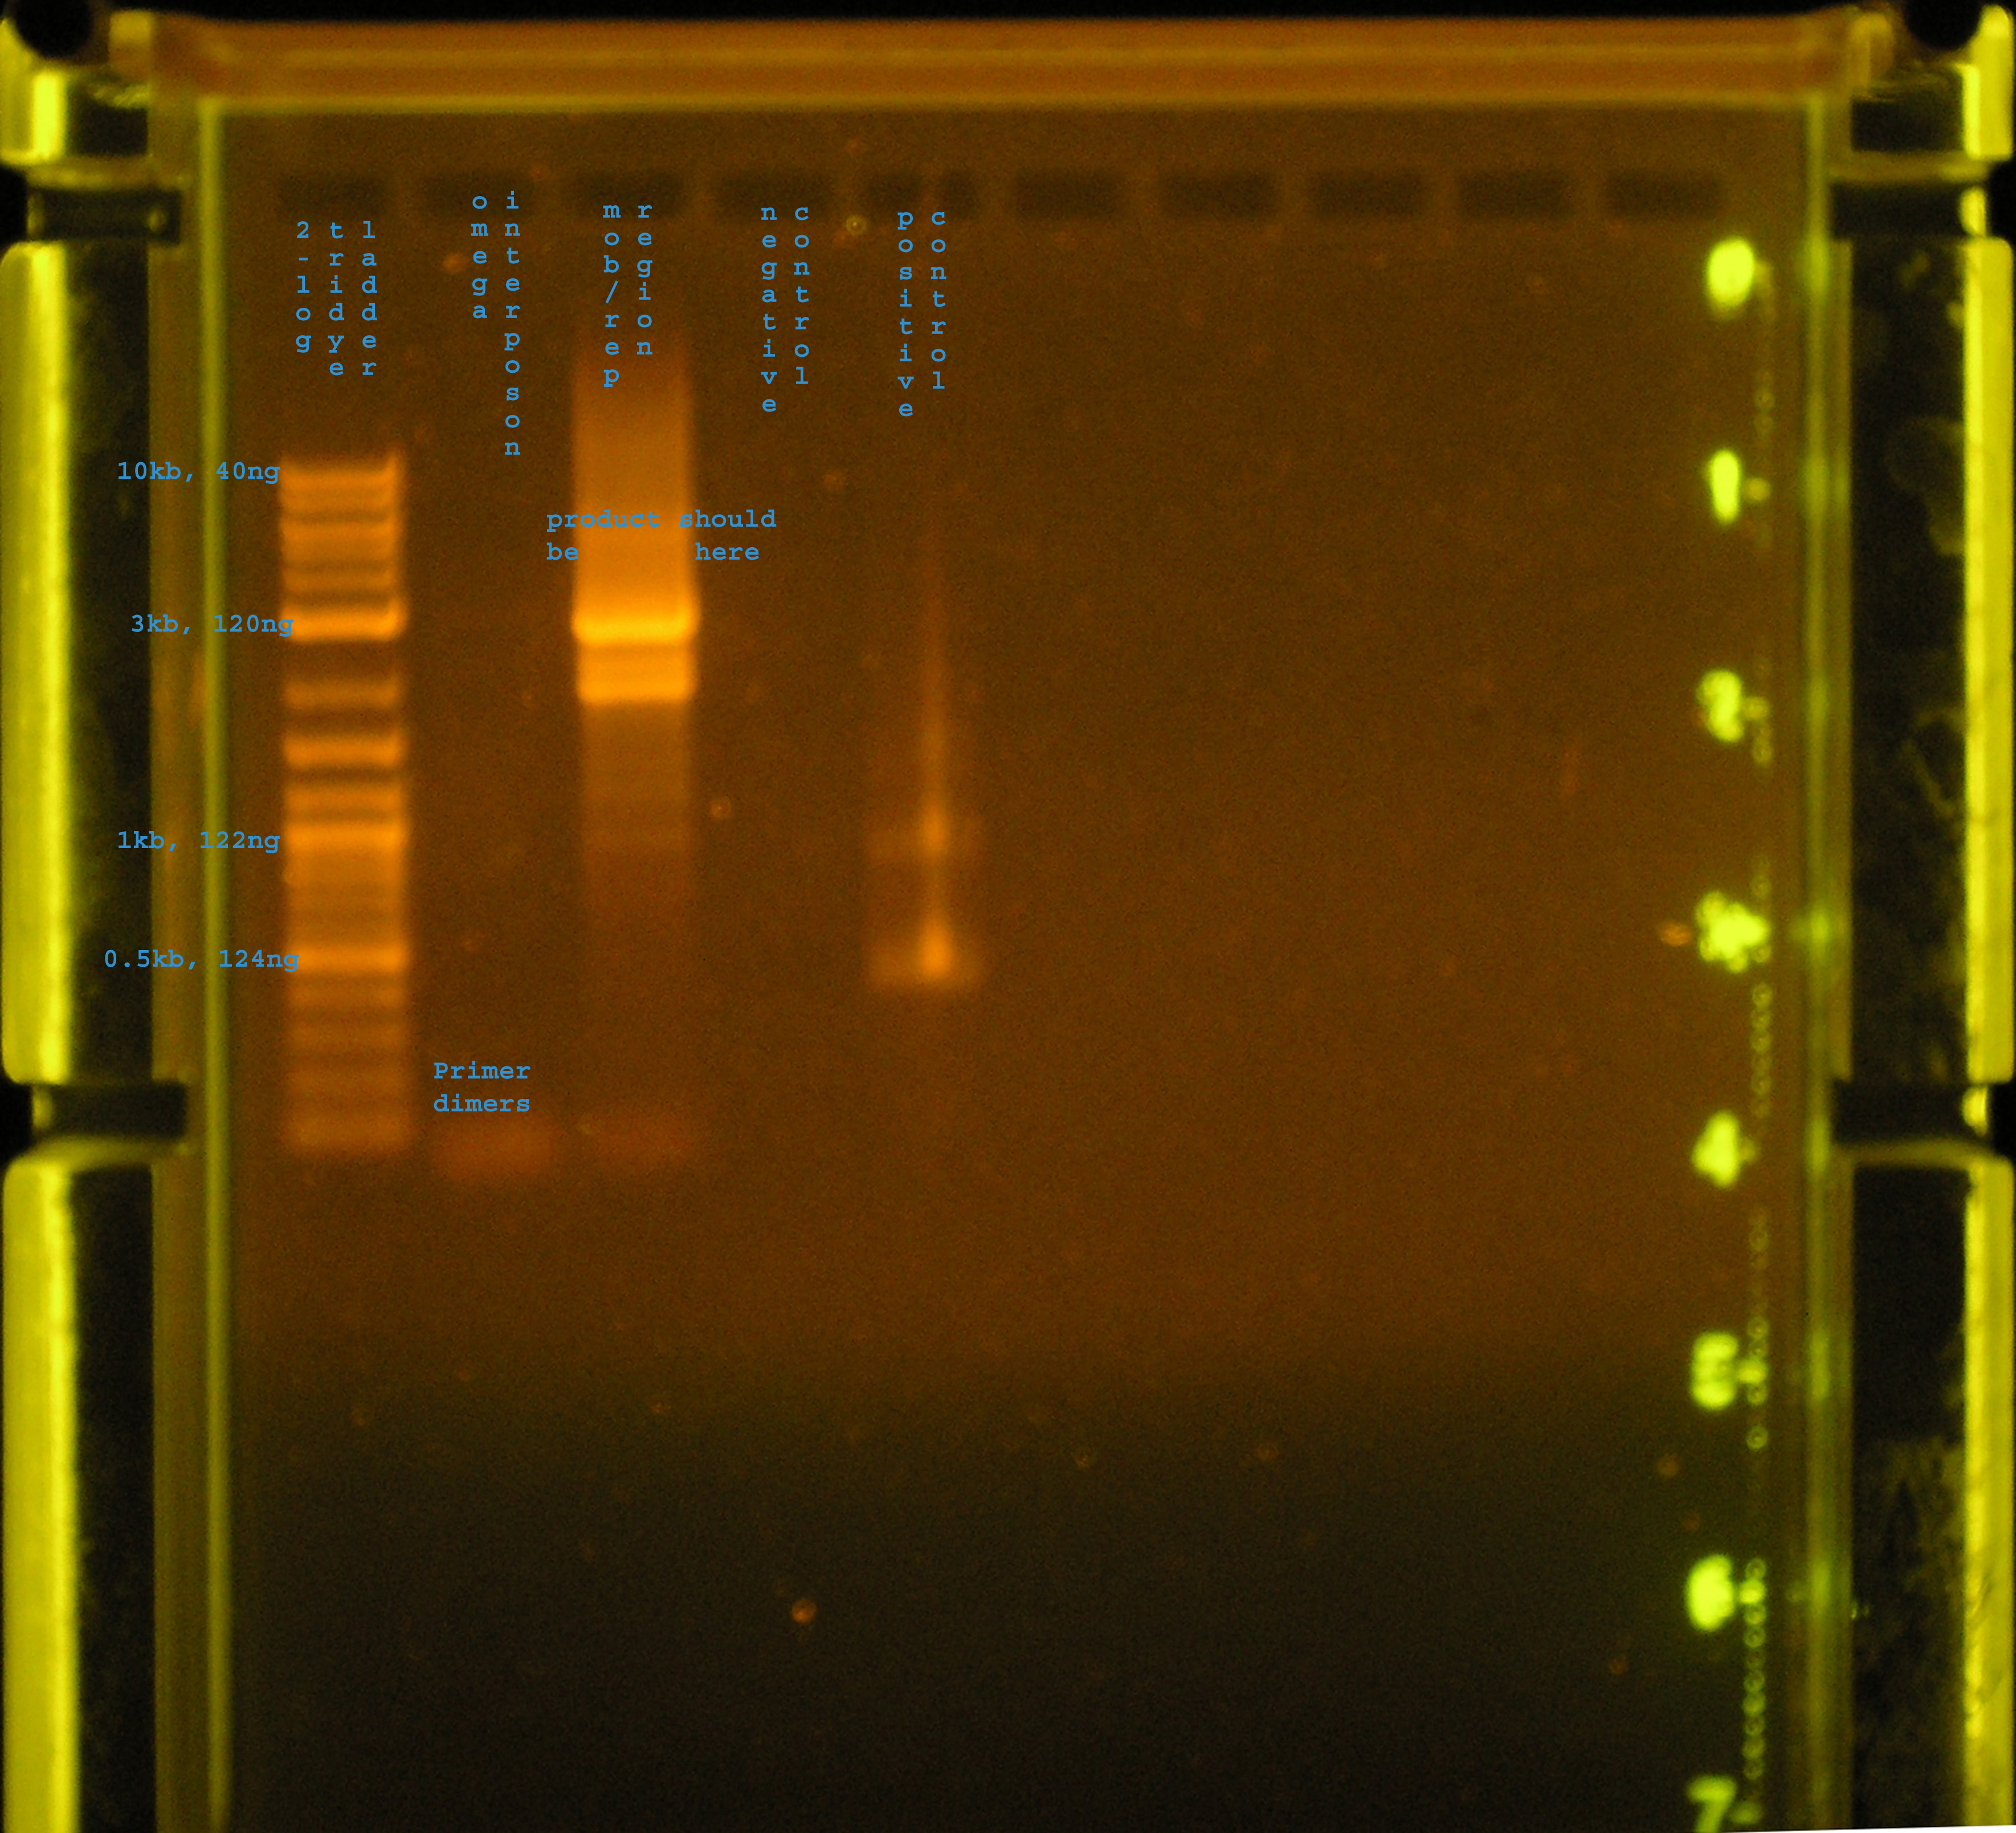 PCR amplification of mob/rep region and omega interposon. Lane 1: 2-log tridye ladder, lane 2:omega interposon, lane 3: mob/rep region, lane 4: negative control, lane 5: positive contol.